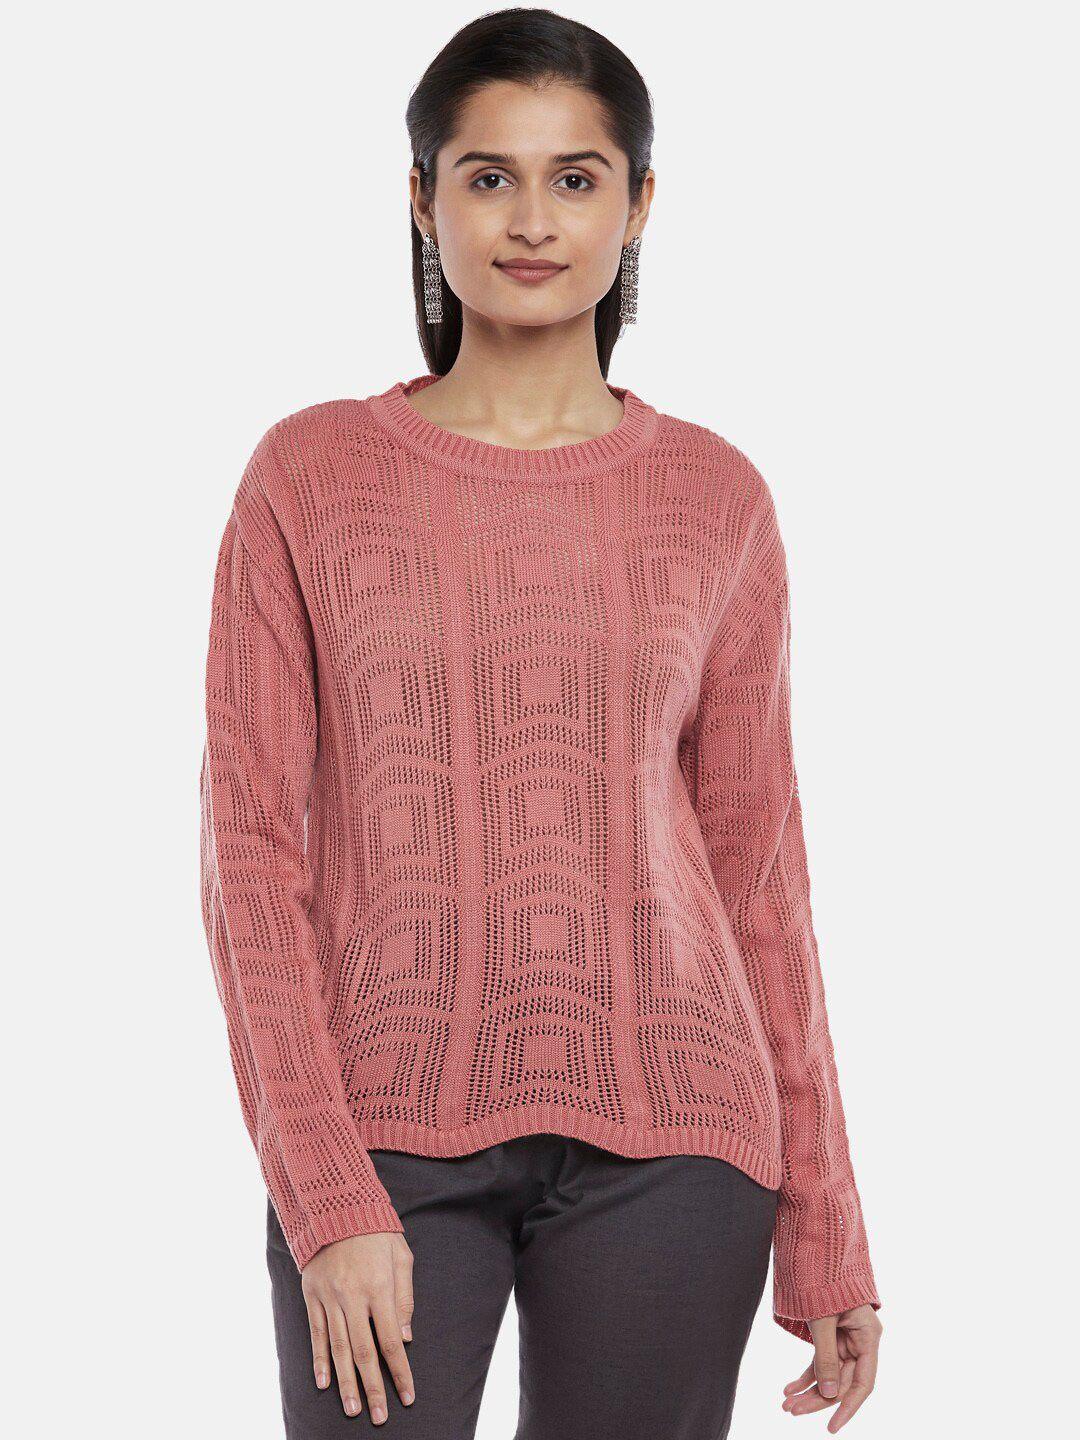 akkriti by pantaloons women pink self design sheer pullover